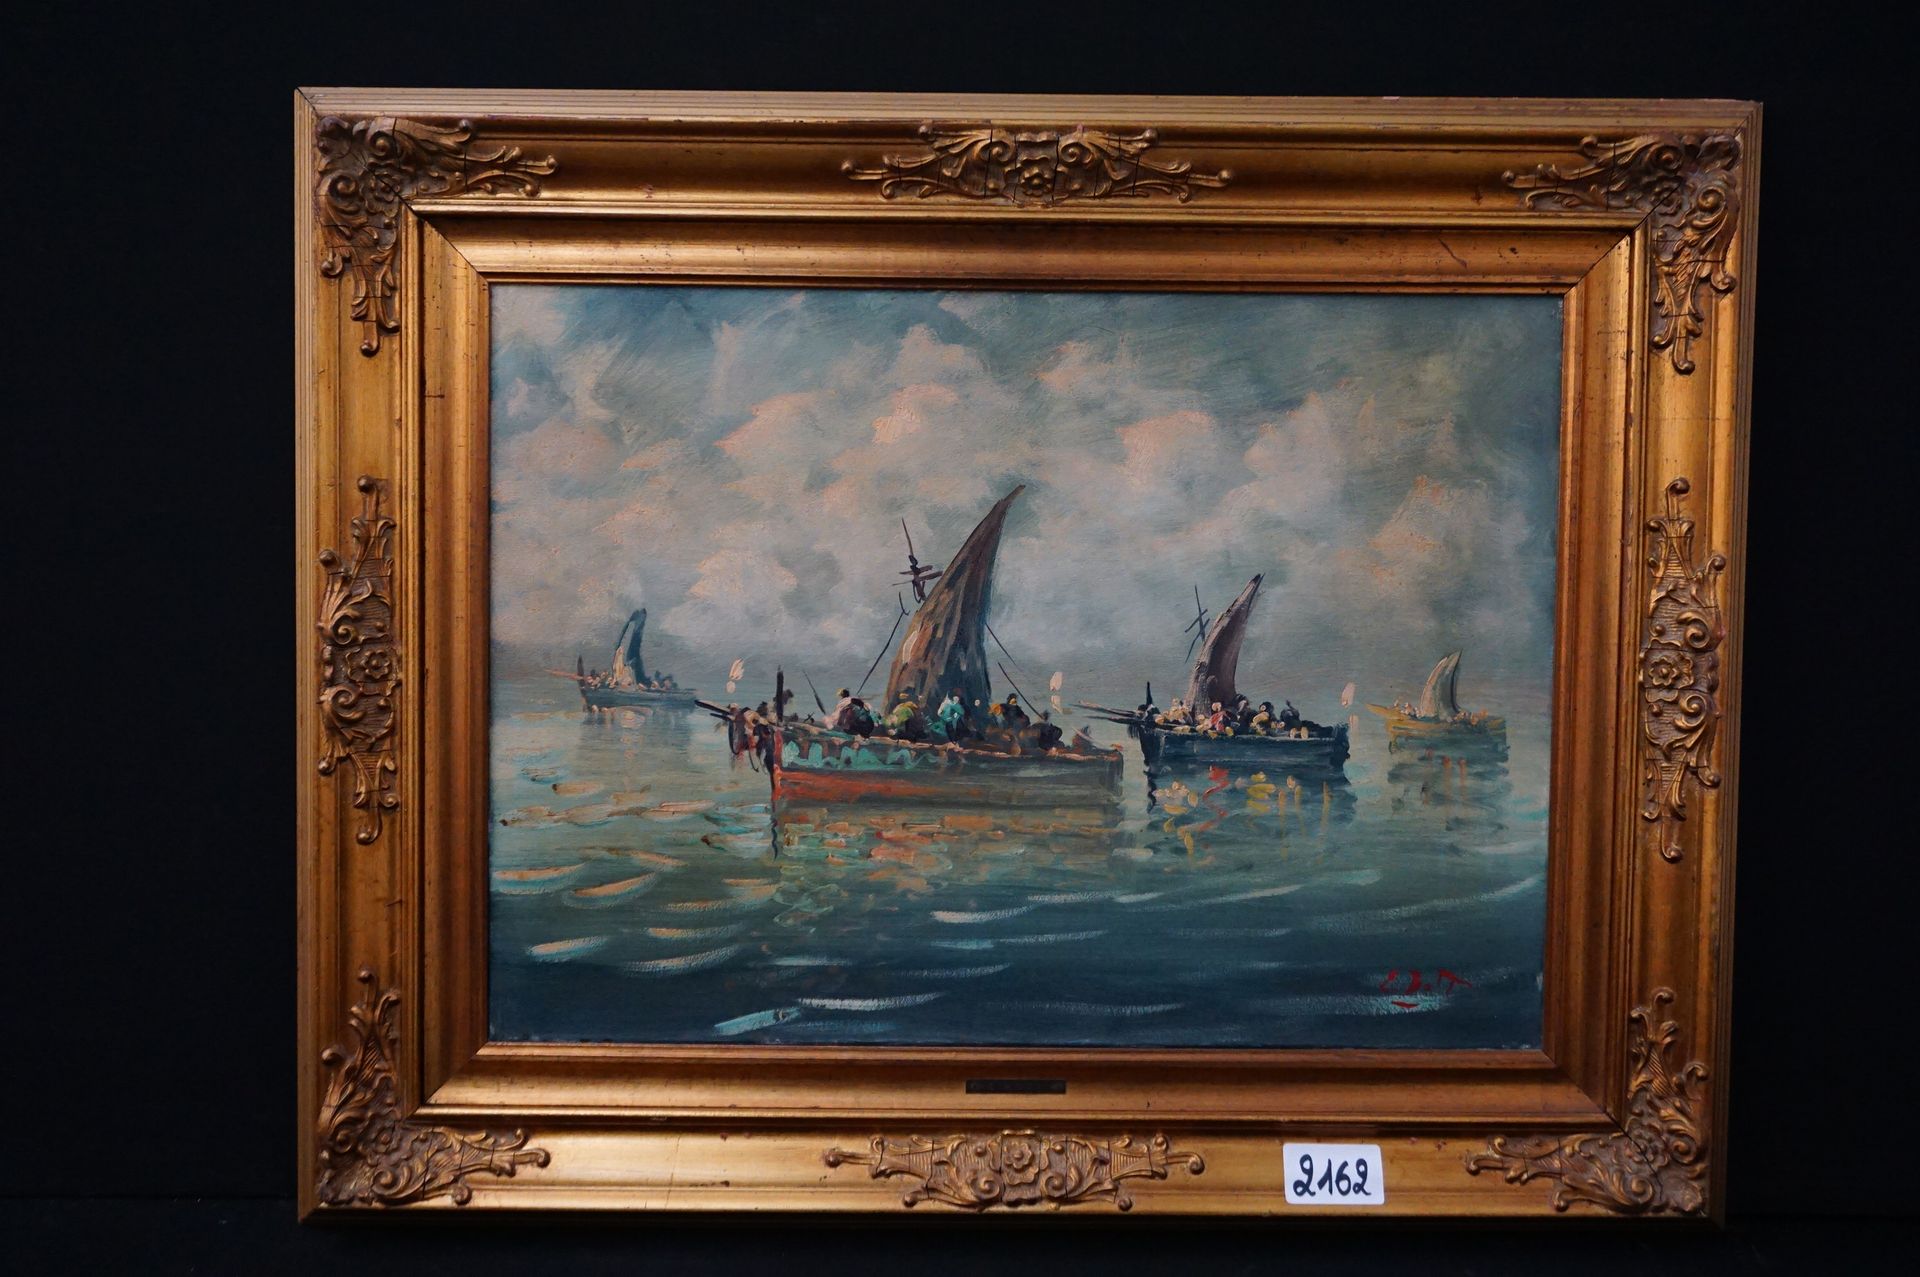 E. BOTT "Marine" - Oil on canvas - Signed - 50 x 70 cm